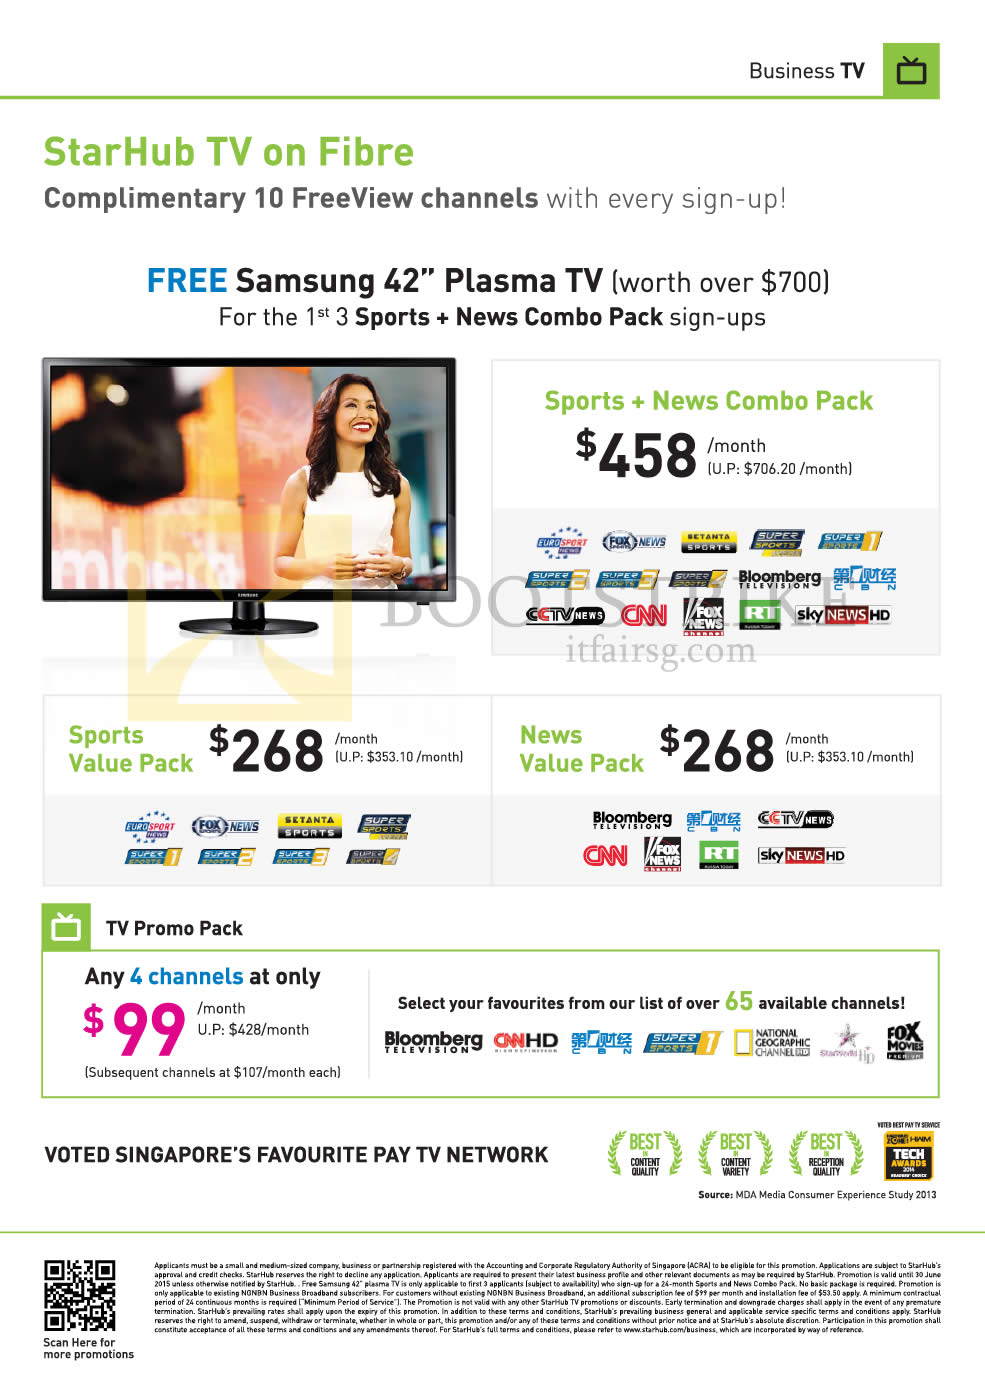 PC SHOW 2015 price list image brochure of Starhub Business TV On Fibre, Free Samsung Plasma TV